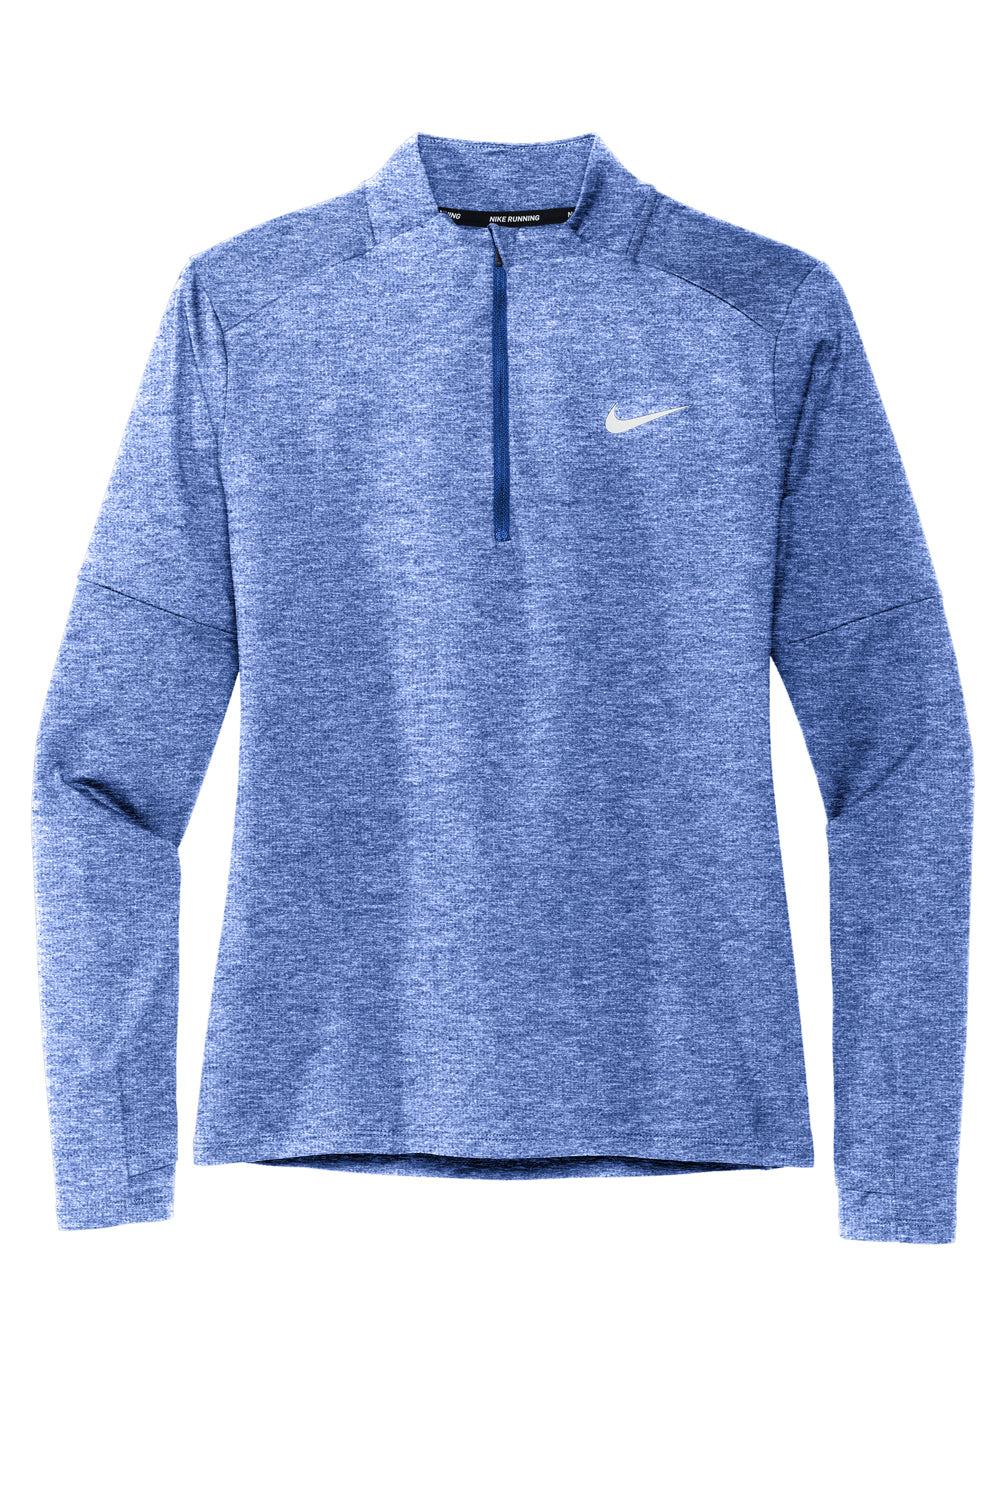 Nike NKDH4951 Womens Element Dri-Fit Moisture Wicking 1/4 Zip Sweatshirt Heather Royal Blue Flat Front